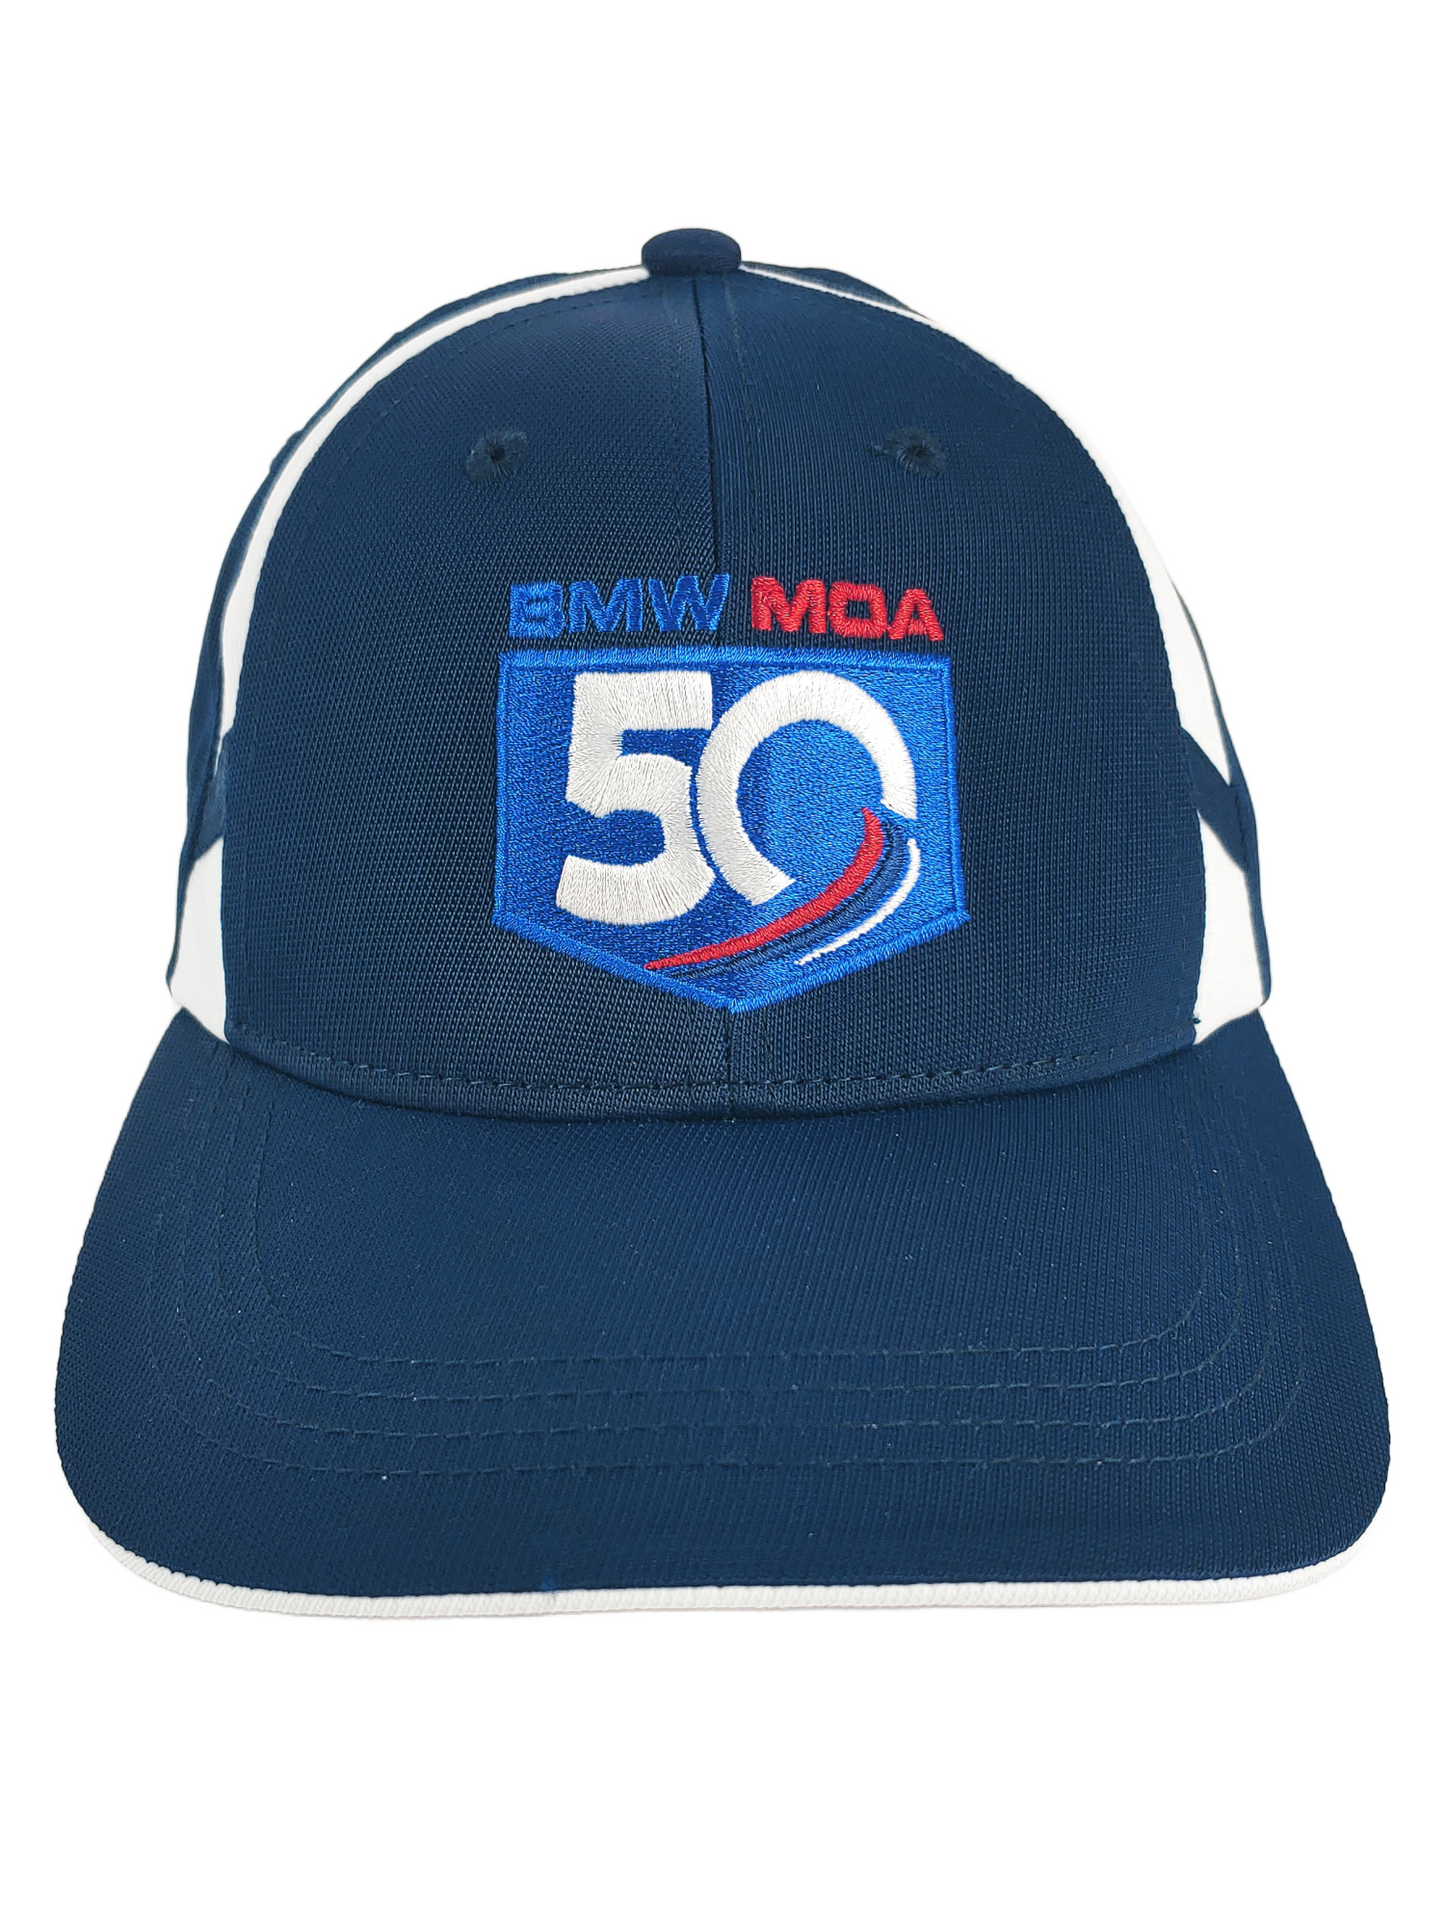 50th Anniversary - Dry Zone Mesh - Blue/White - Baseball Style Hat